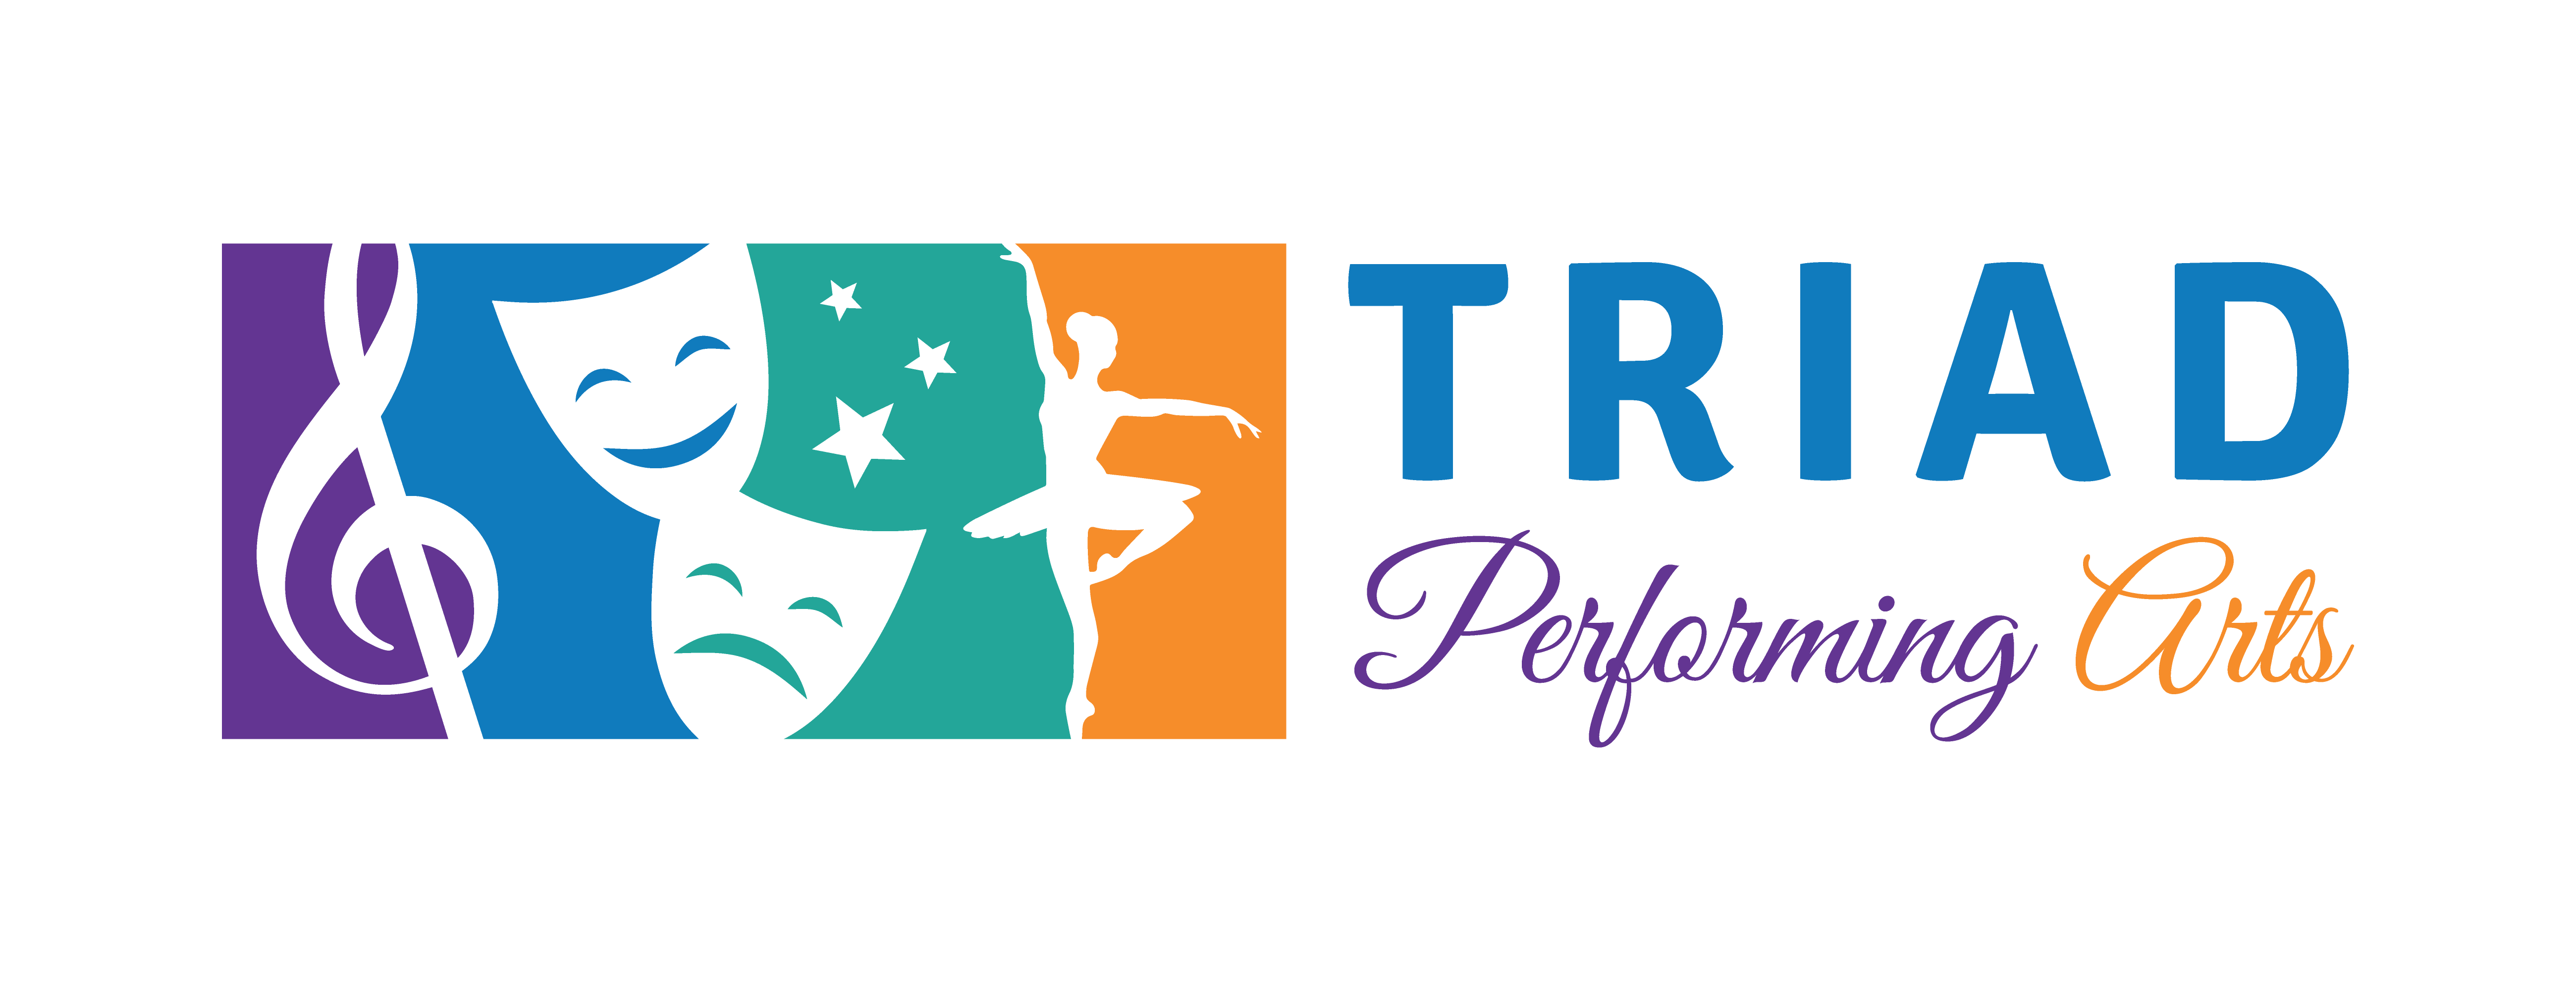 Triad Performing Arts of Arizona logo